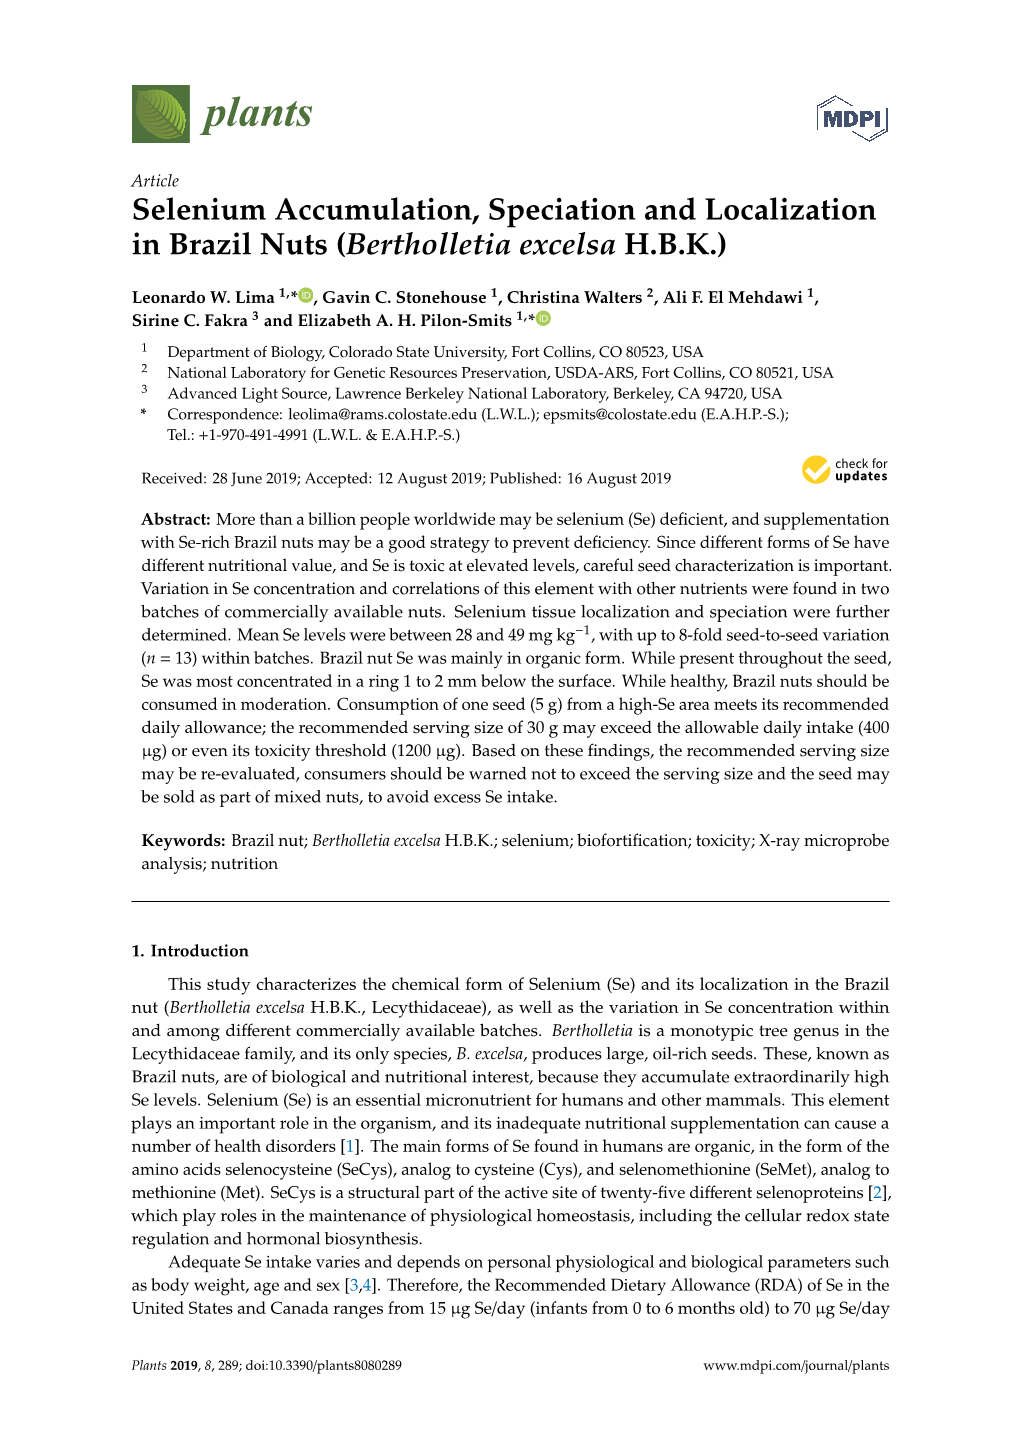 Selenium Accumulation, Speciation and Localization in Brazil Nuts (Bertholletia Excelsa H.B.K.)